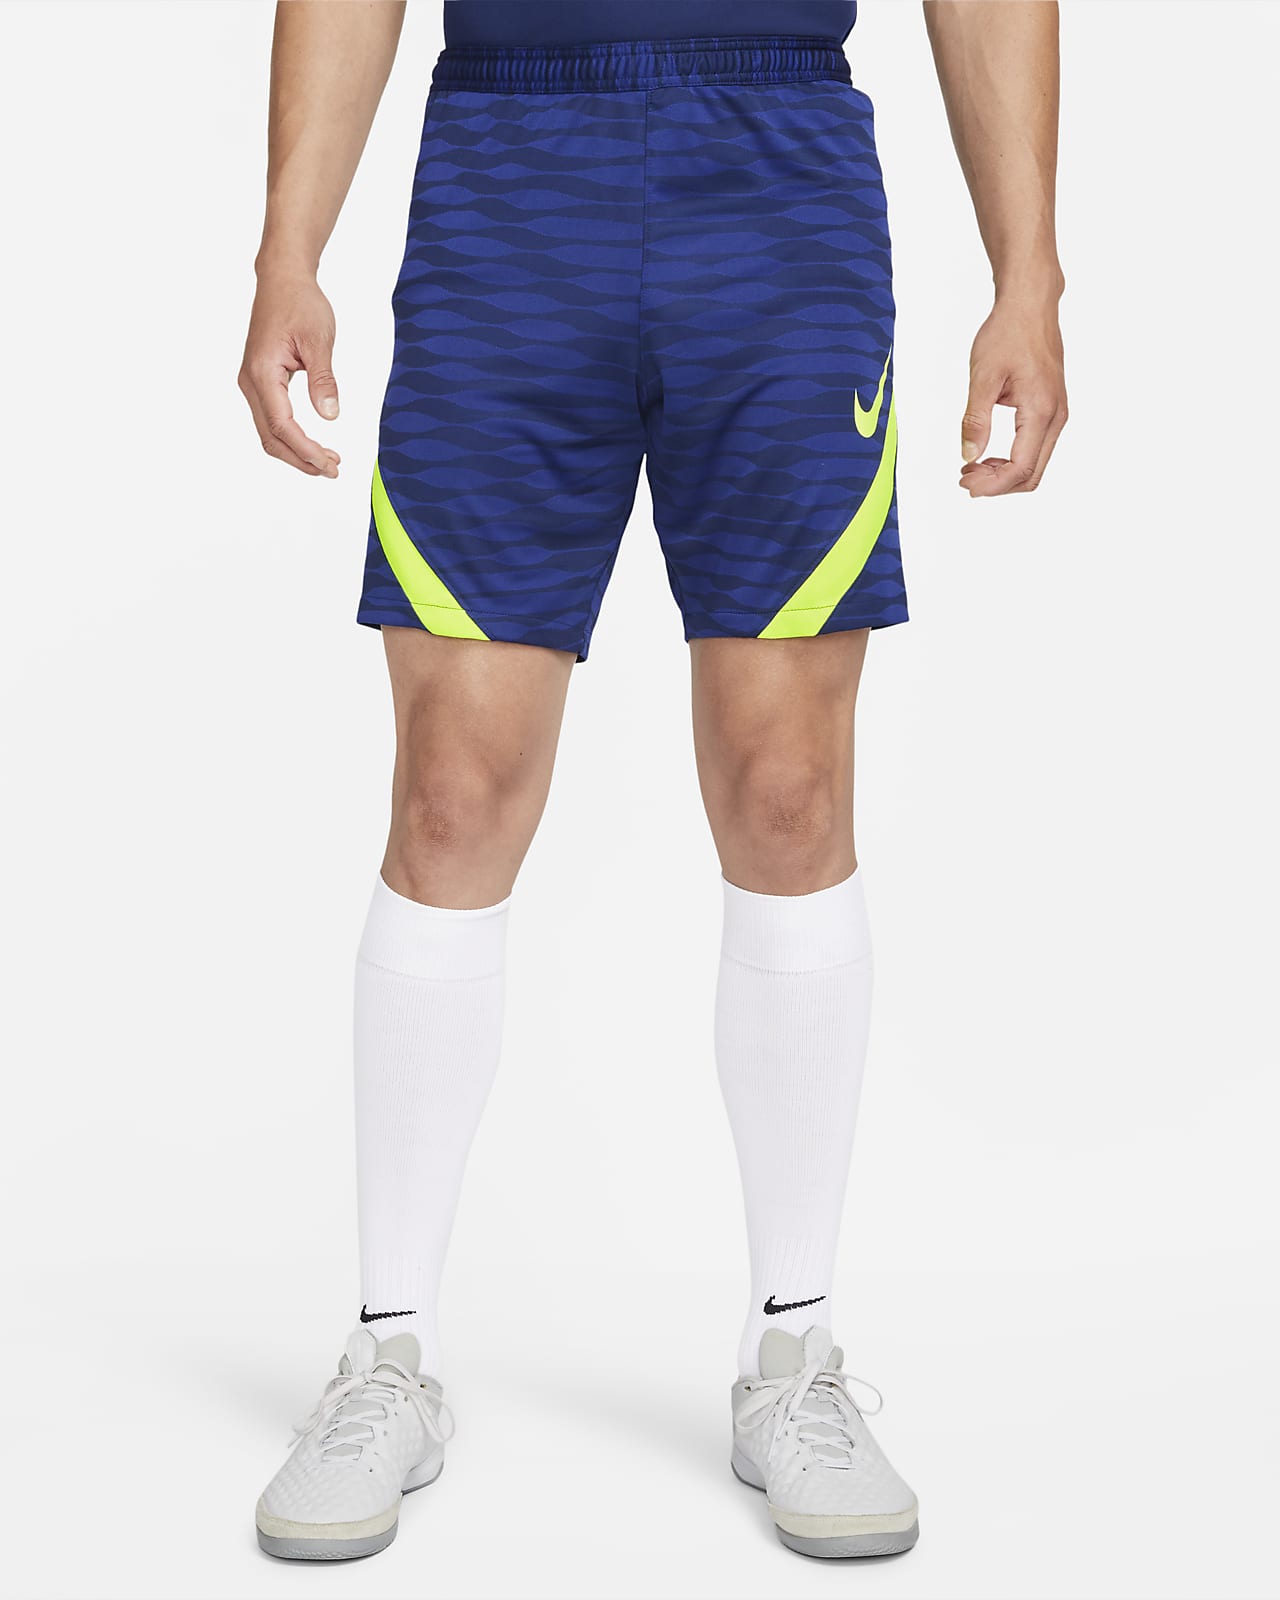 Nike Dri-FIT Strike Men's Knit Soccer Shorts